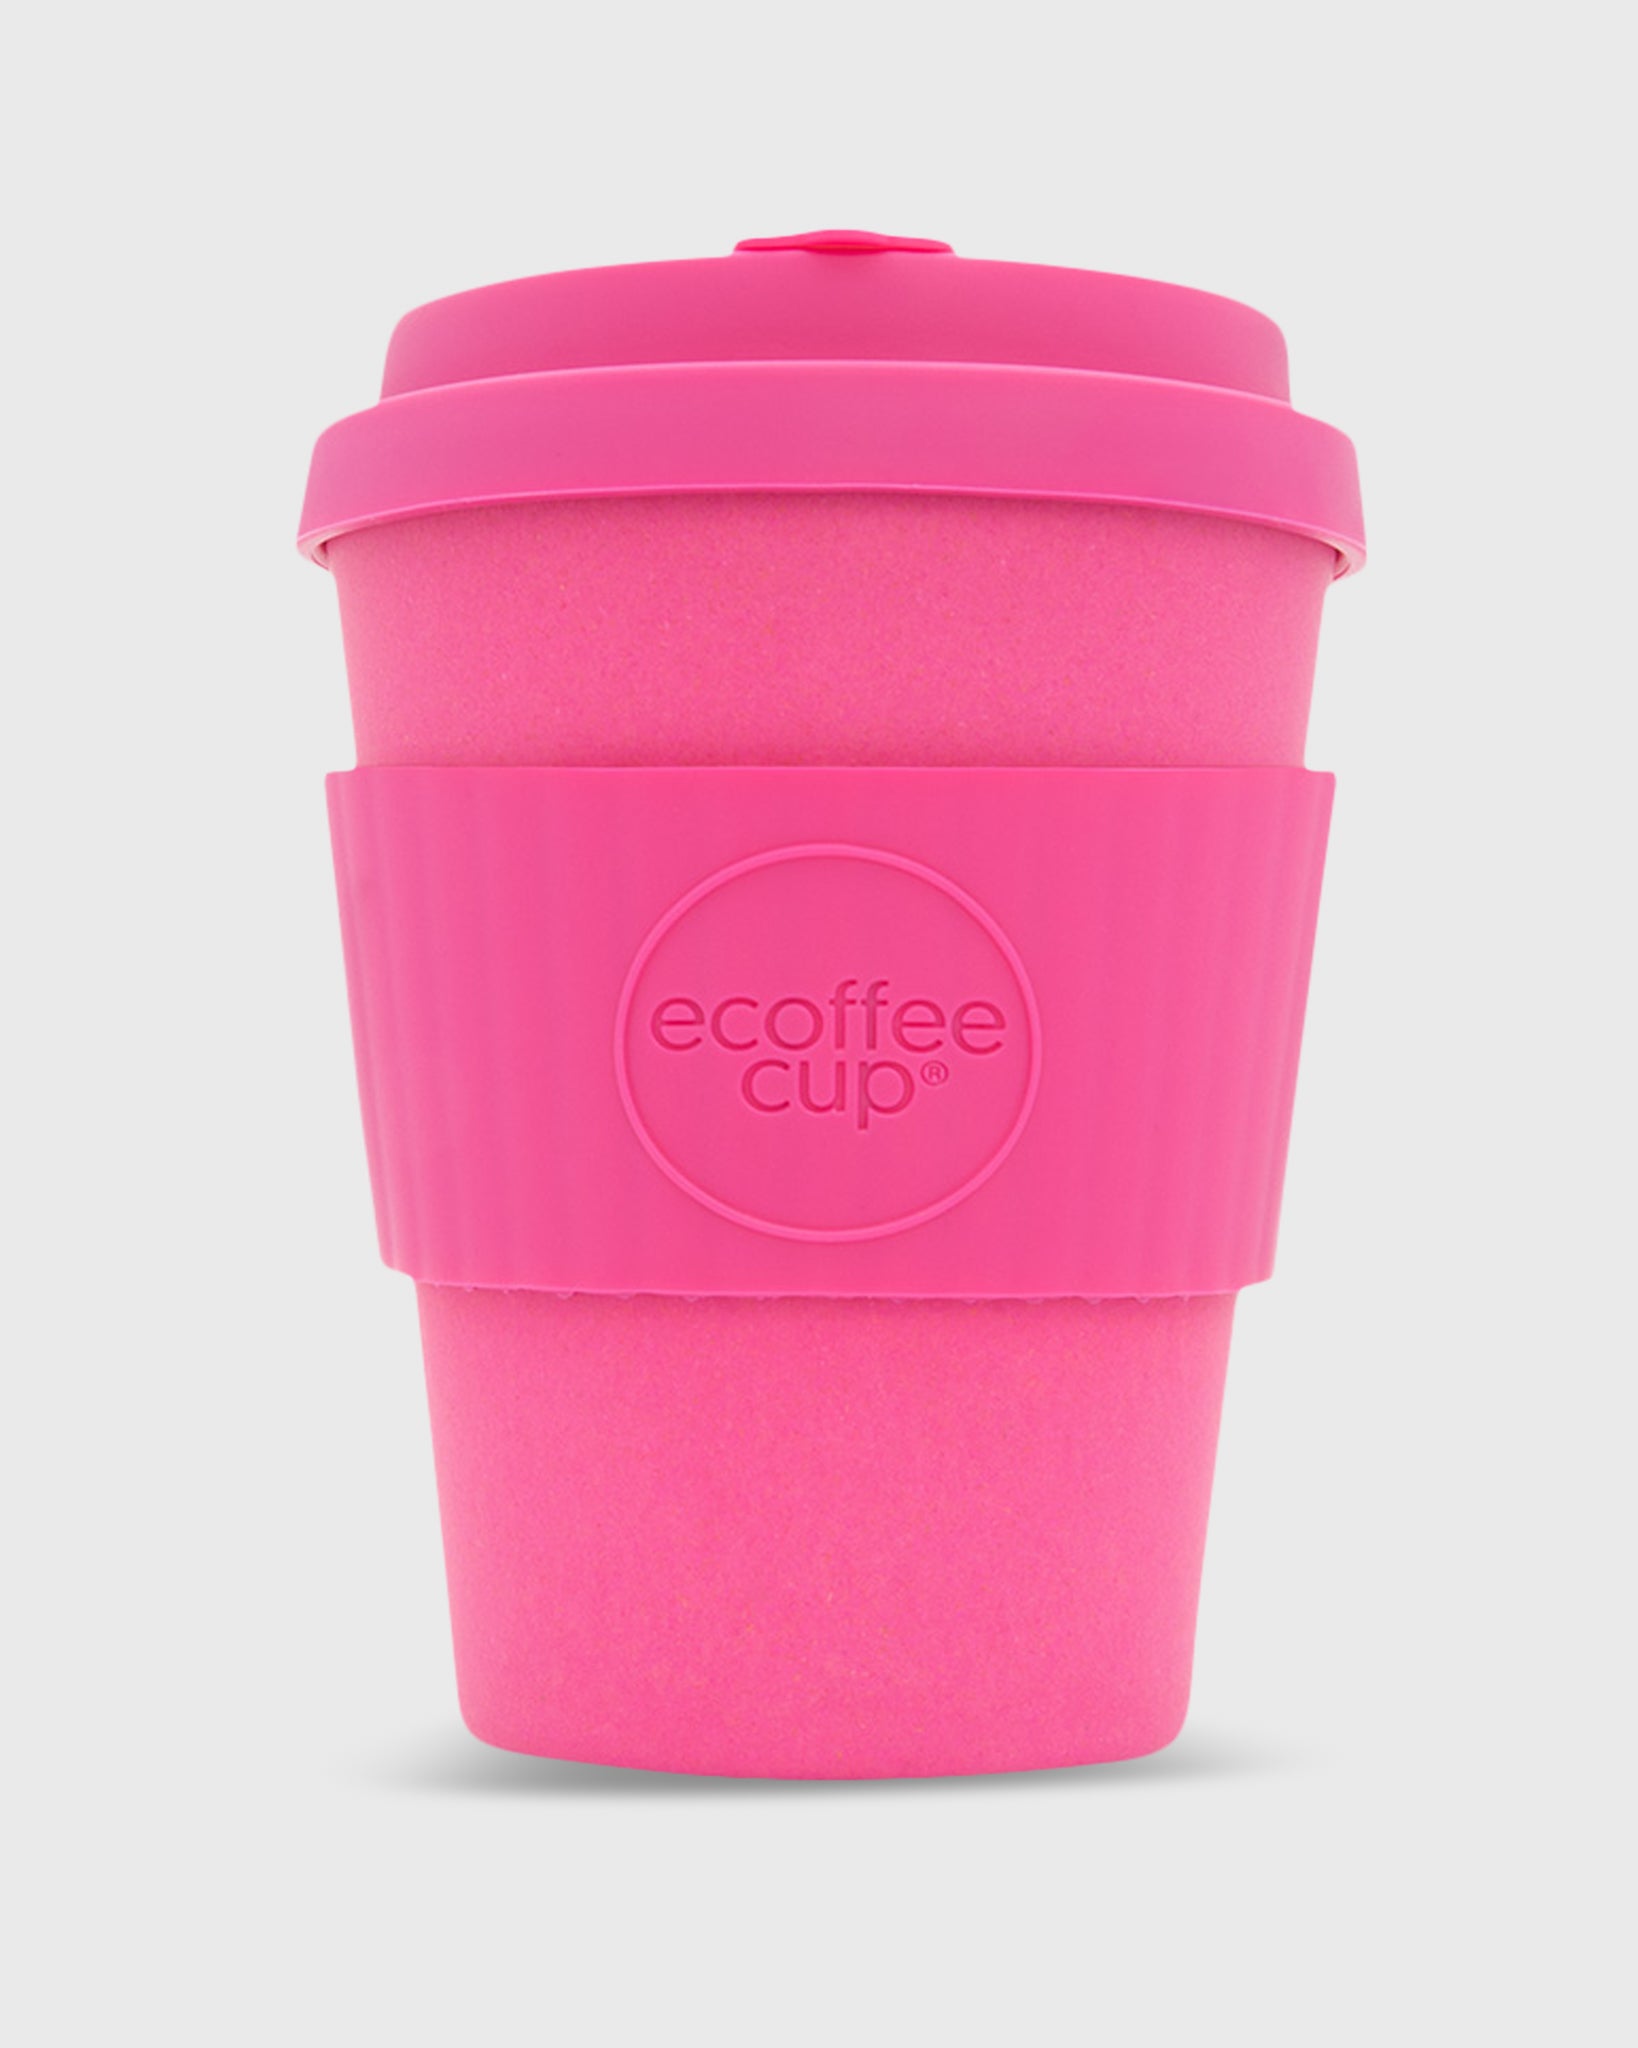 Tazzone portacialde 12€ #new #fiocco #pink #coffee #portacialde